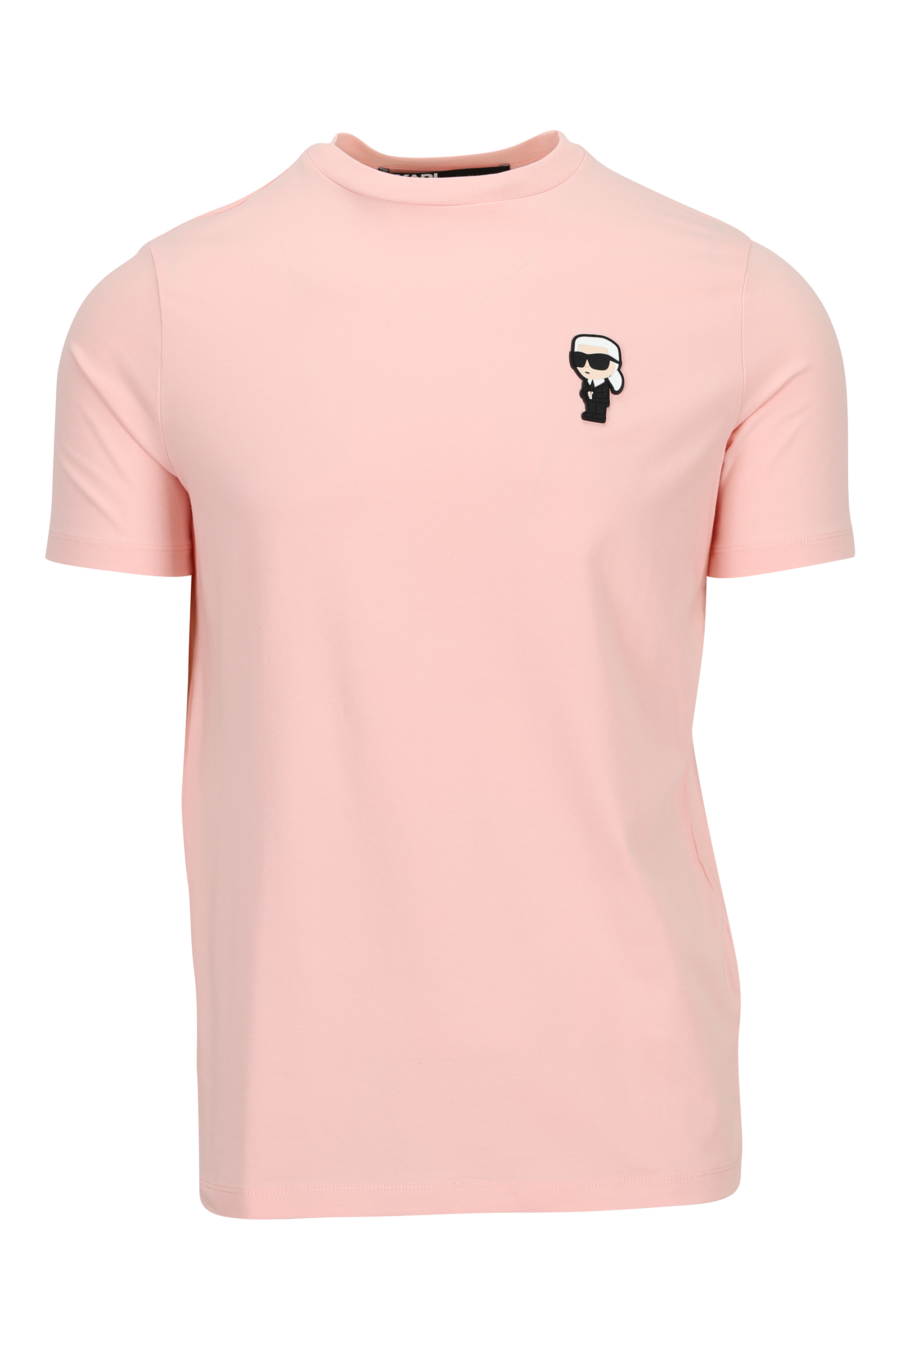 Camiseta rosa con minilogo "karl" en goma - 4062226954594